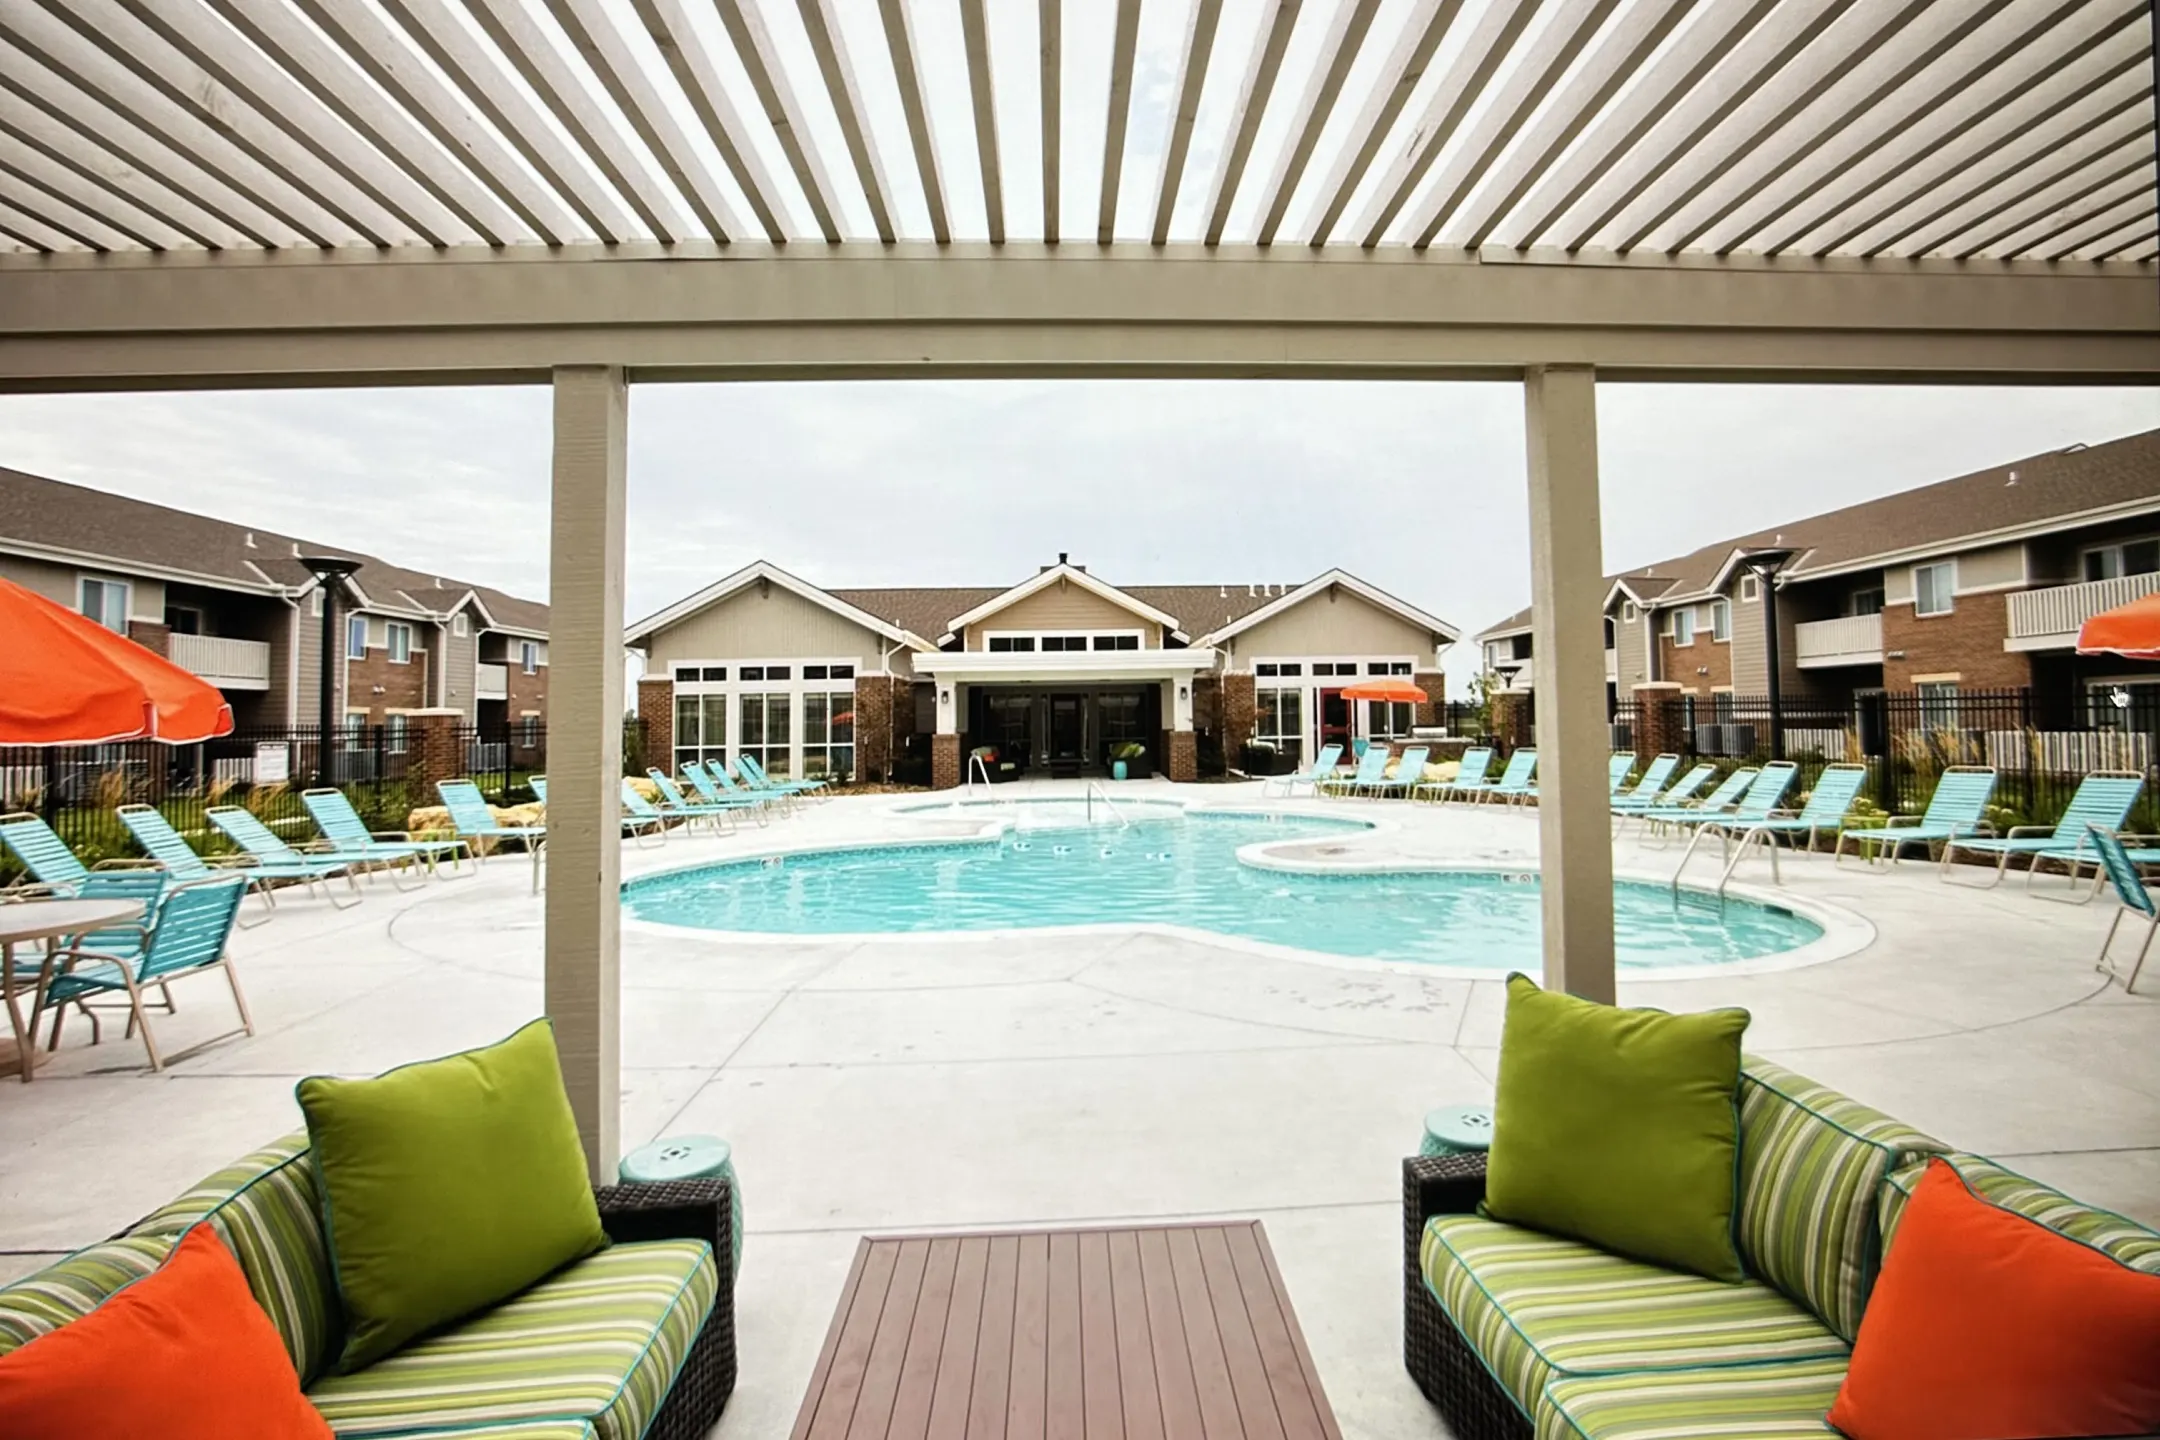 Pool - SunSTONE Apartment Homes at Fox Ridge - Wichita, KS